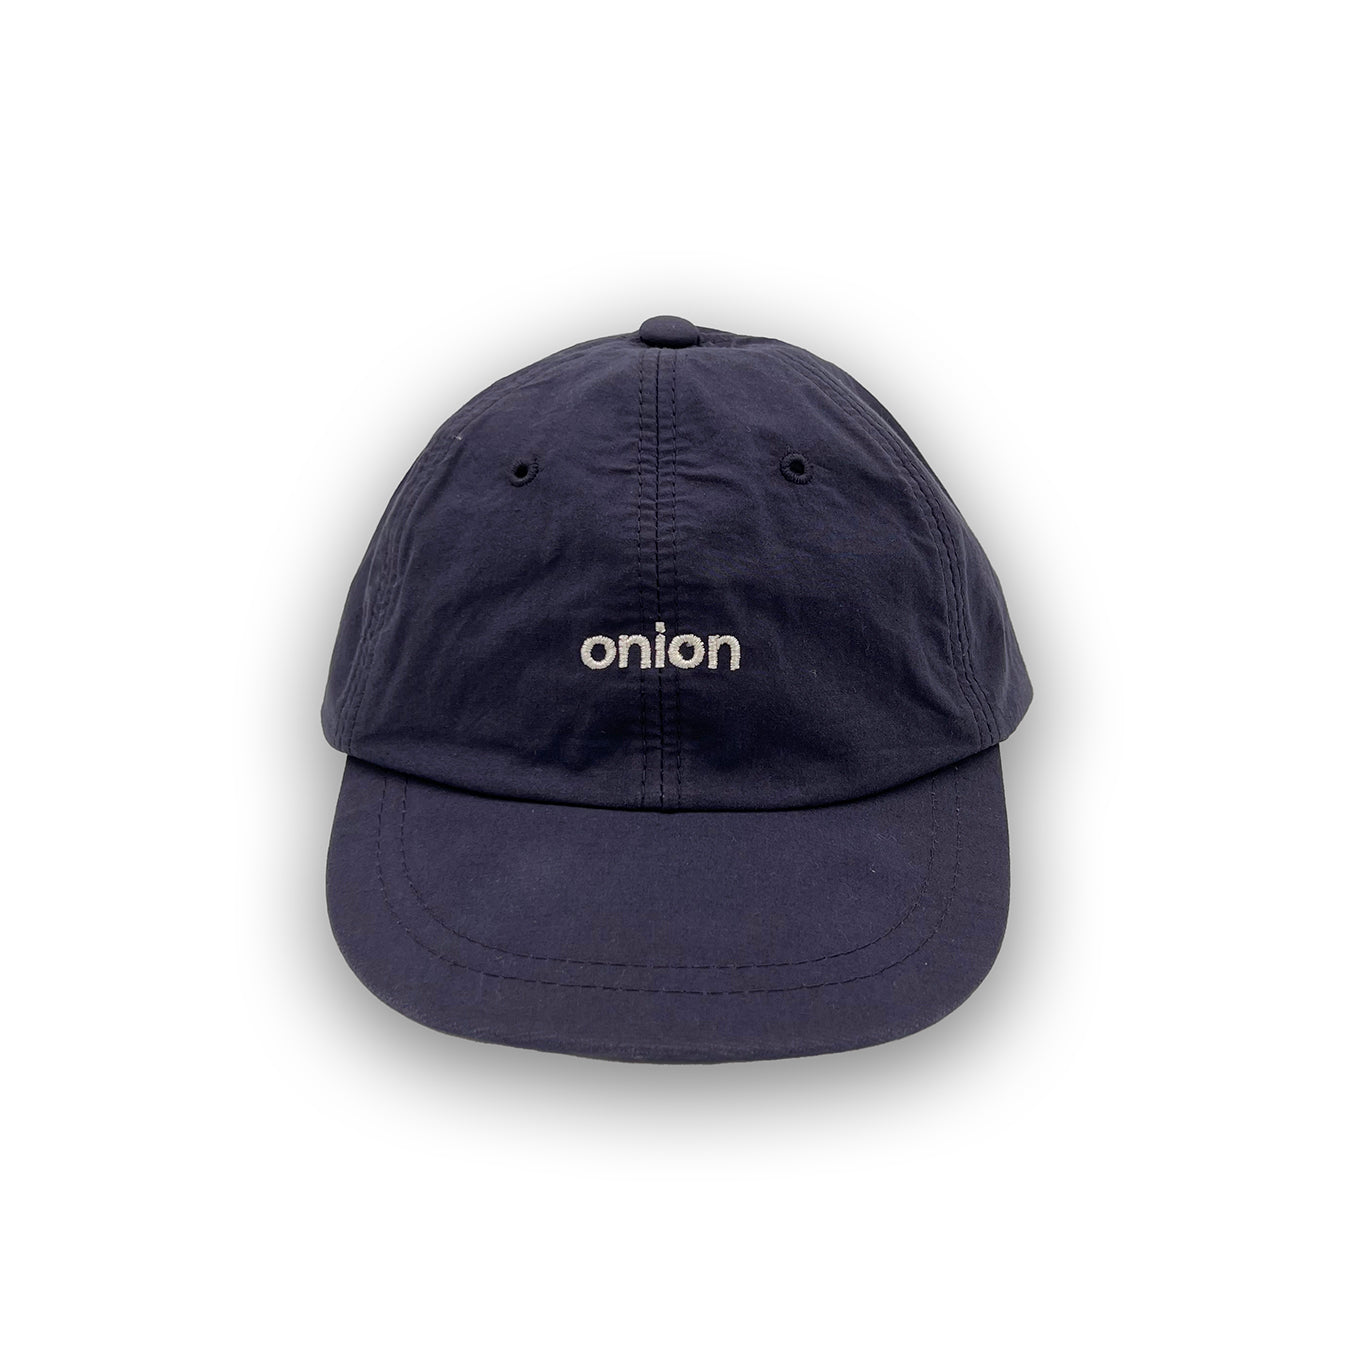 Onion Ball Cap